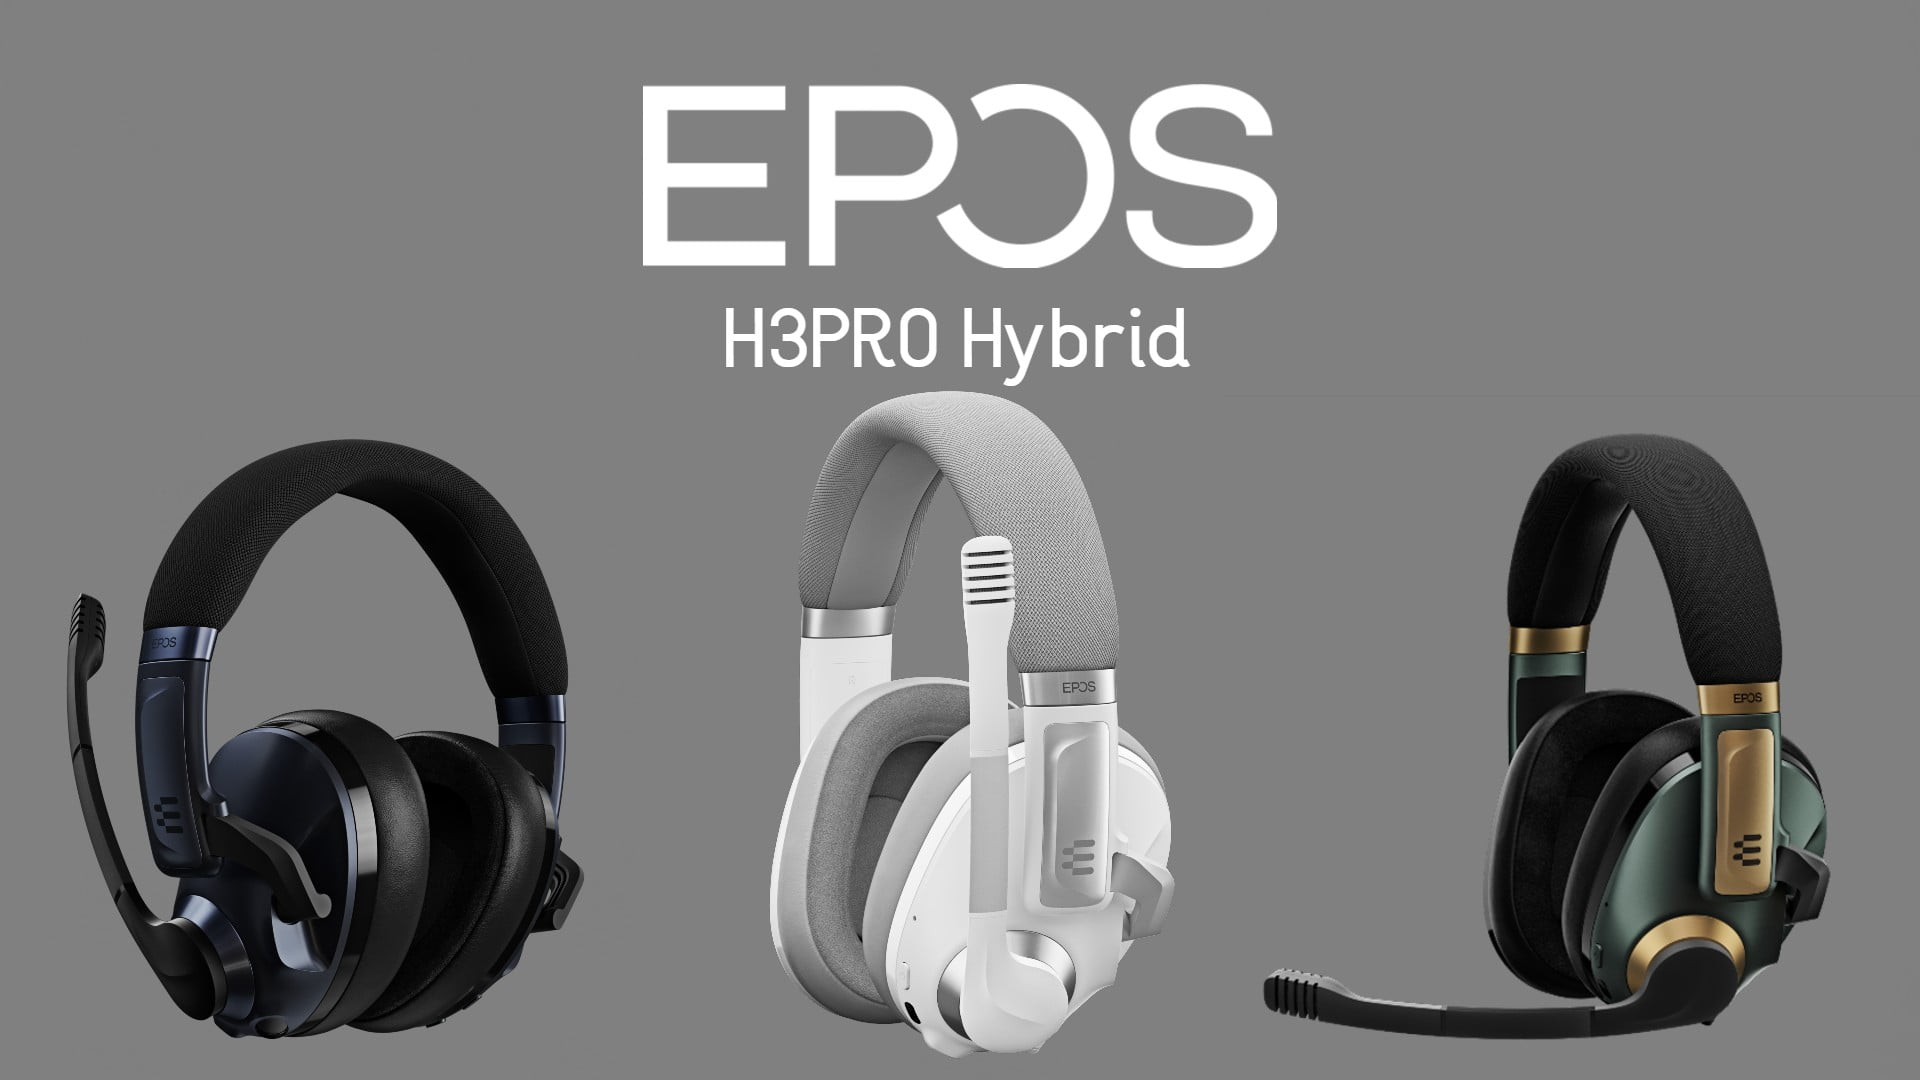 H1 pro hybrid. Epos Gaming Headphones h3 Pro. Epos h3 Hybrid батарея. H3 Pro Hybrid подключить ps4. Акустик гейминг.